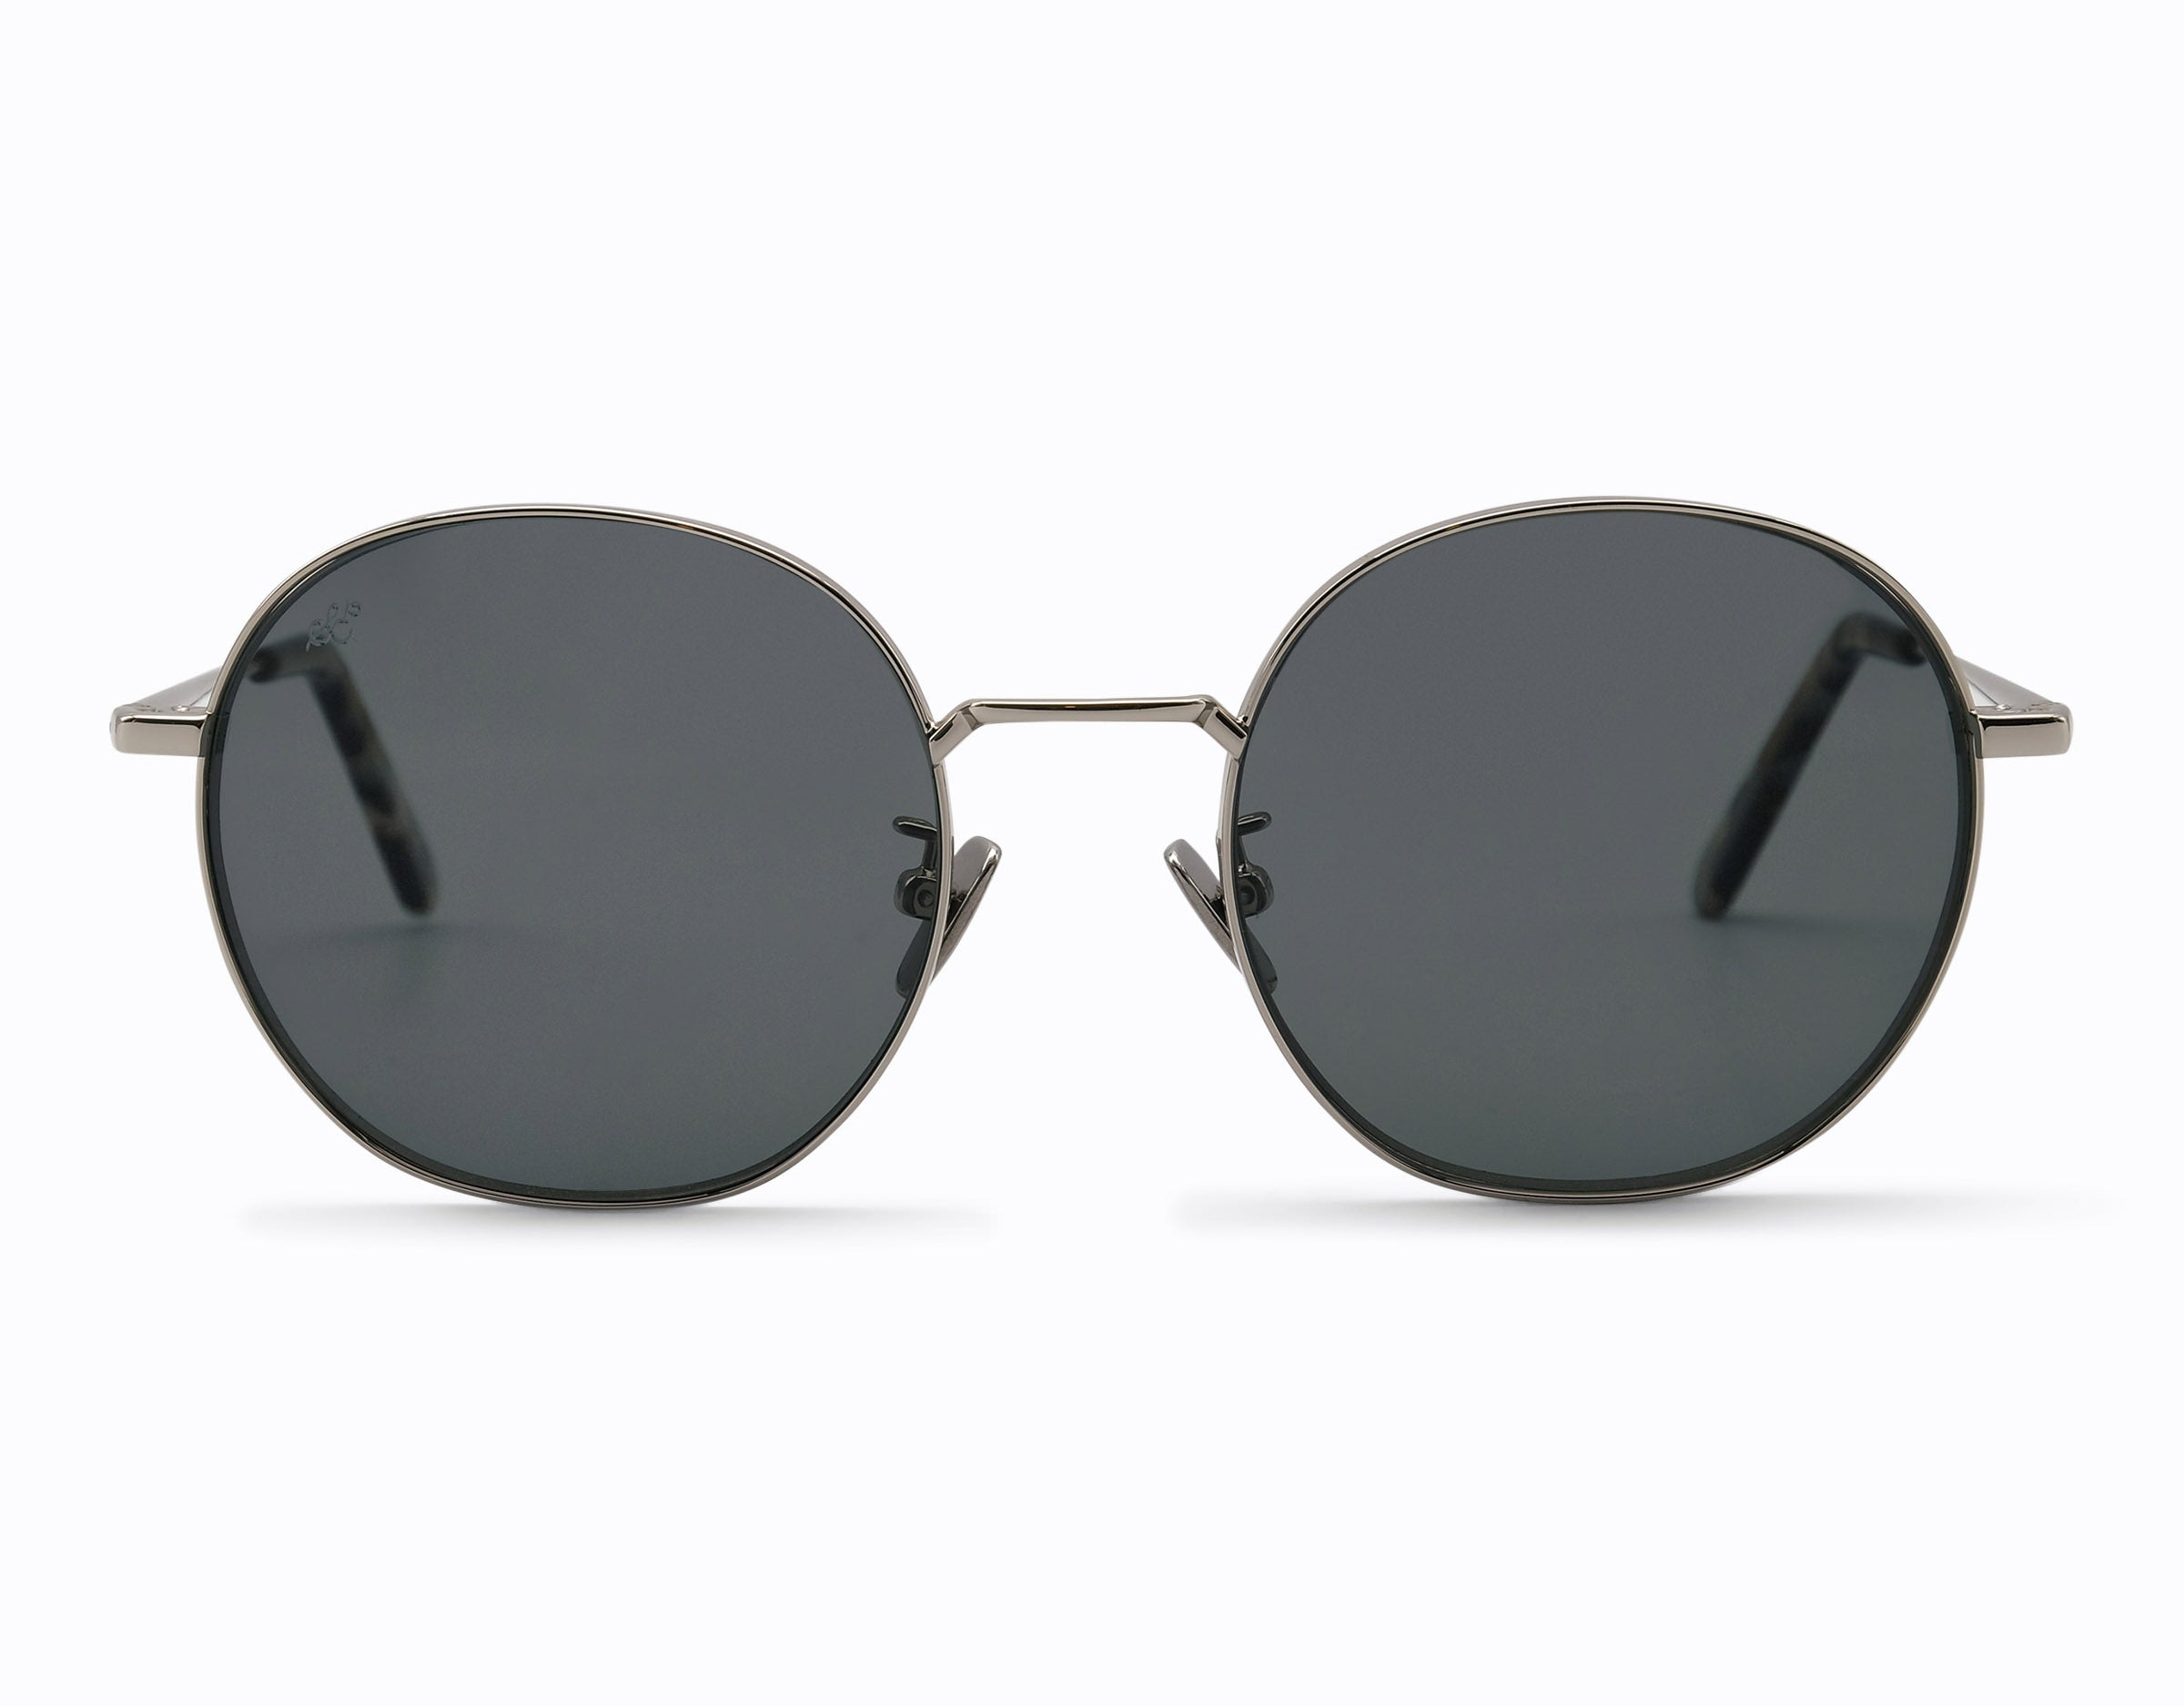 Miami Polarised Sunglasses SummerEyez Silver - Black Smoke 